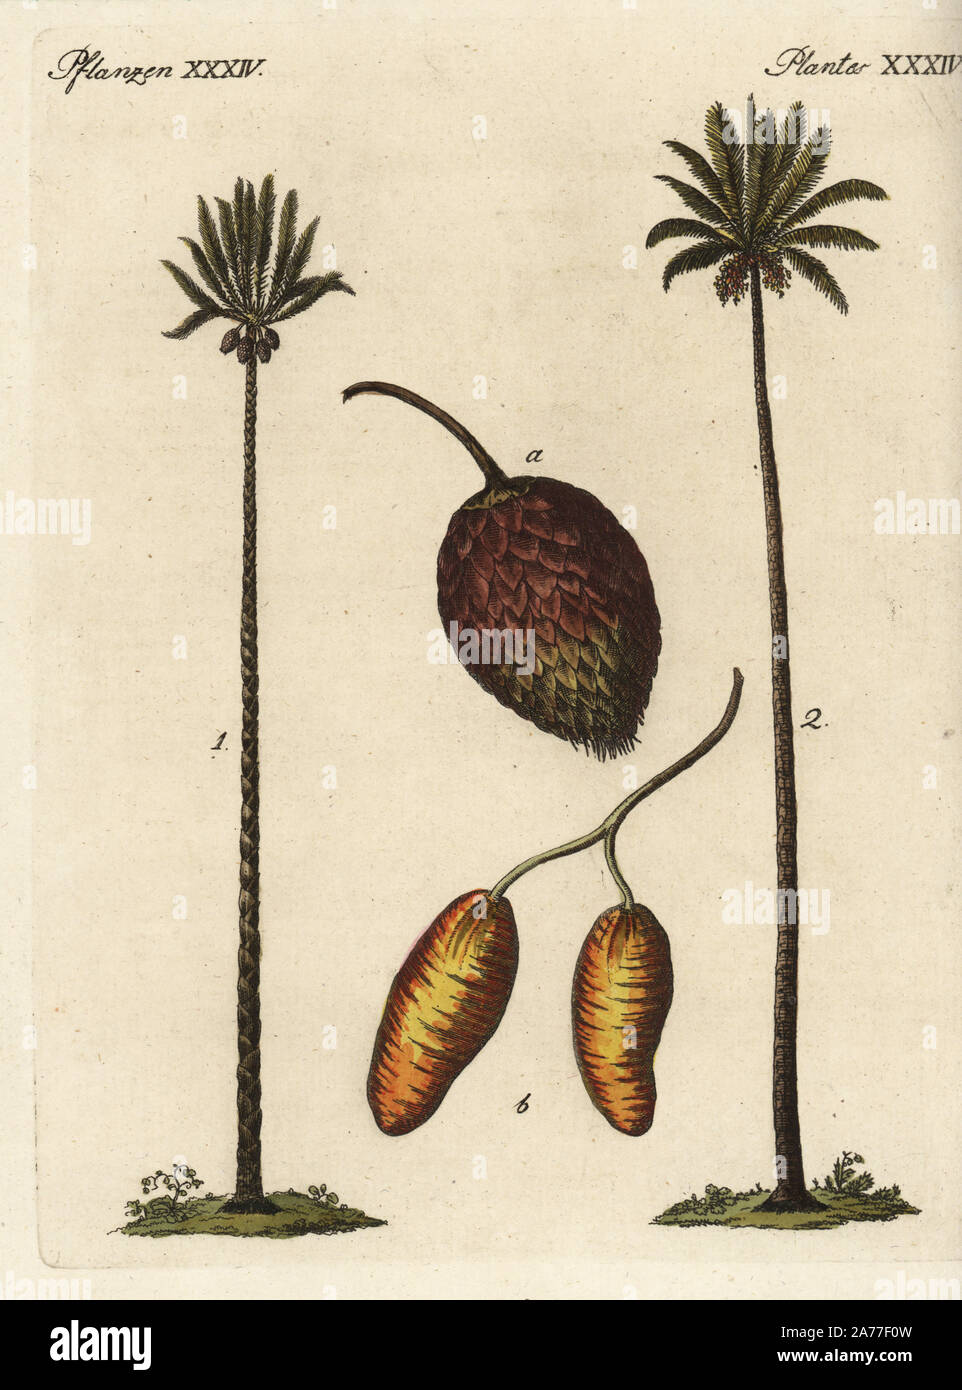 Queen sago palm, Cycas circinalis, and date palm, Phoenix dactylifera. Handcoloured copperplate engraving from Friedrich Johann Bertuch's Bilderbuch fur Kinder (Picture Book for Children), Weimar, 1795. Stock Photo